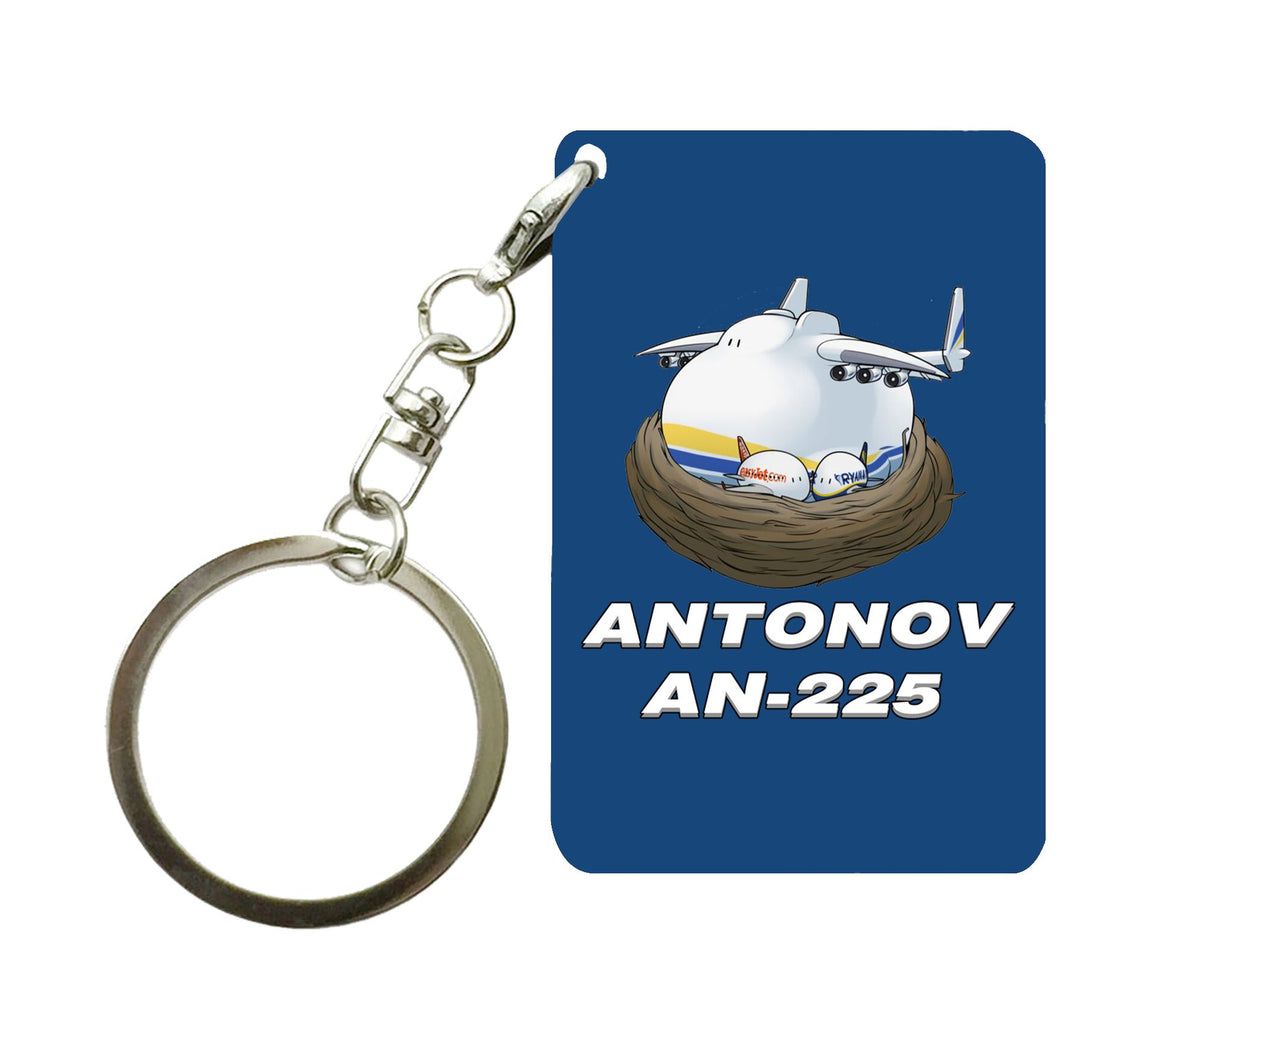 Antonov AN-225 (22) Designed Key Chains